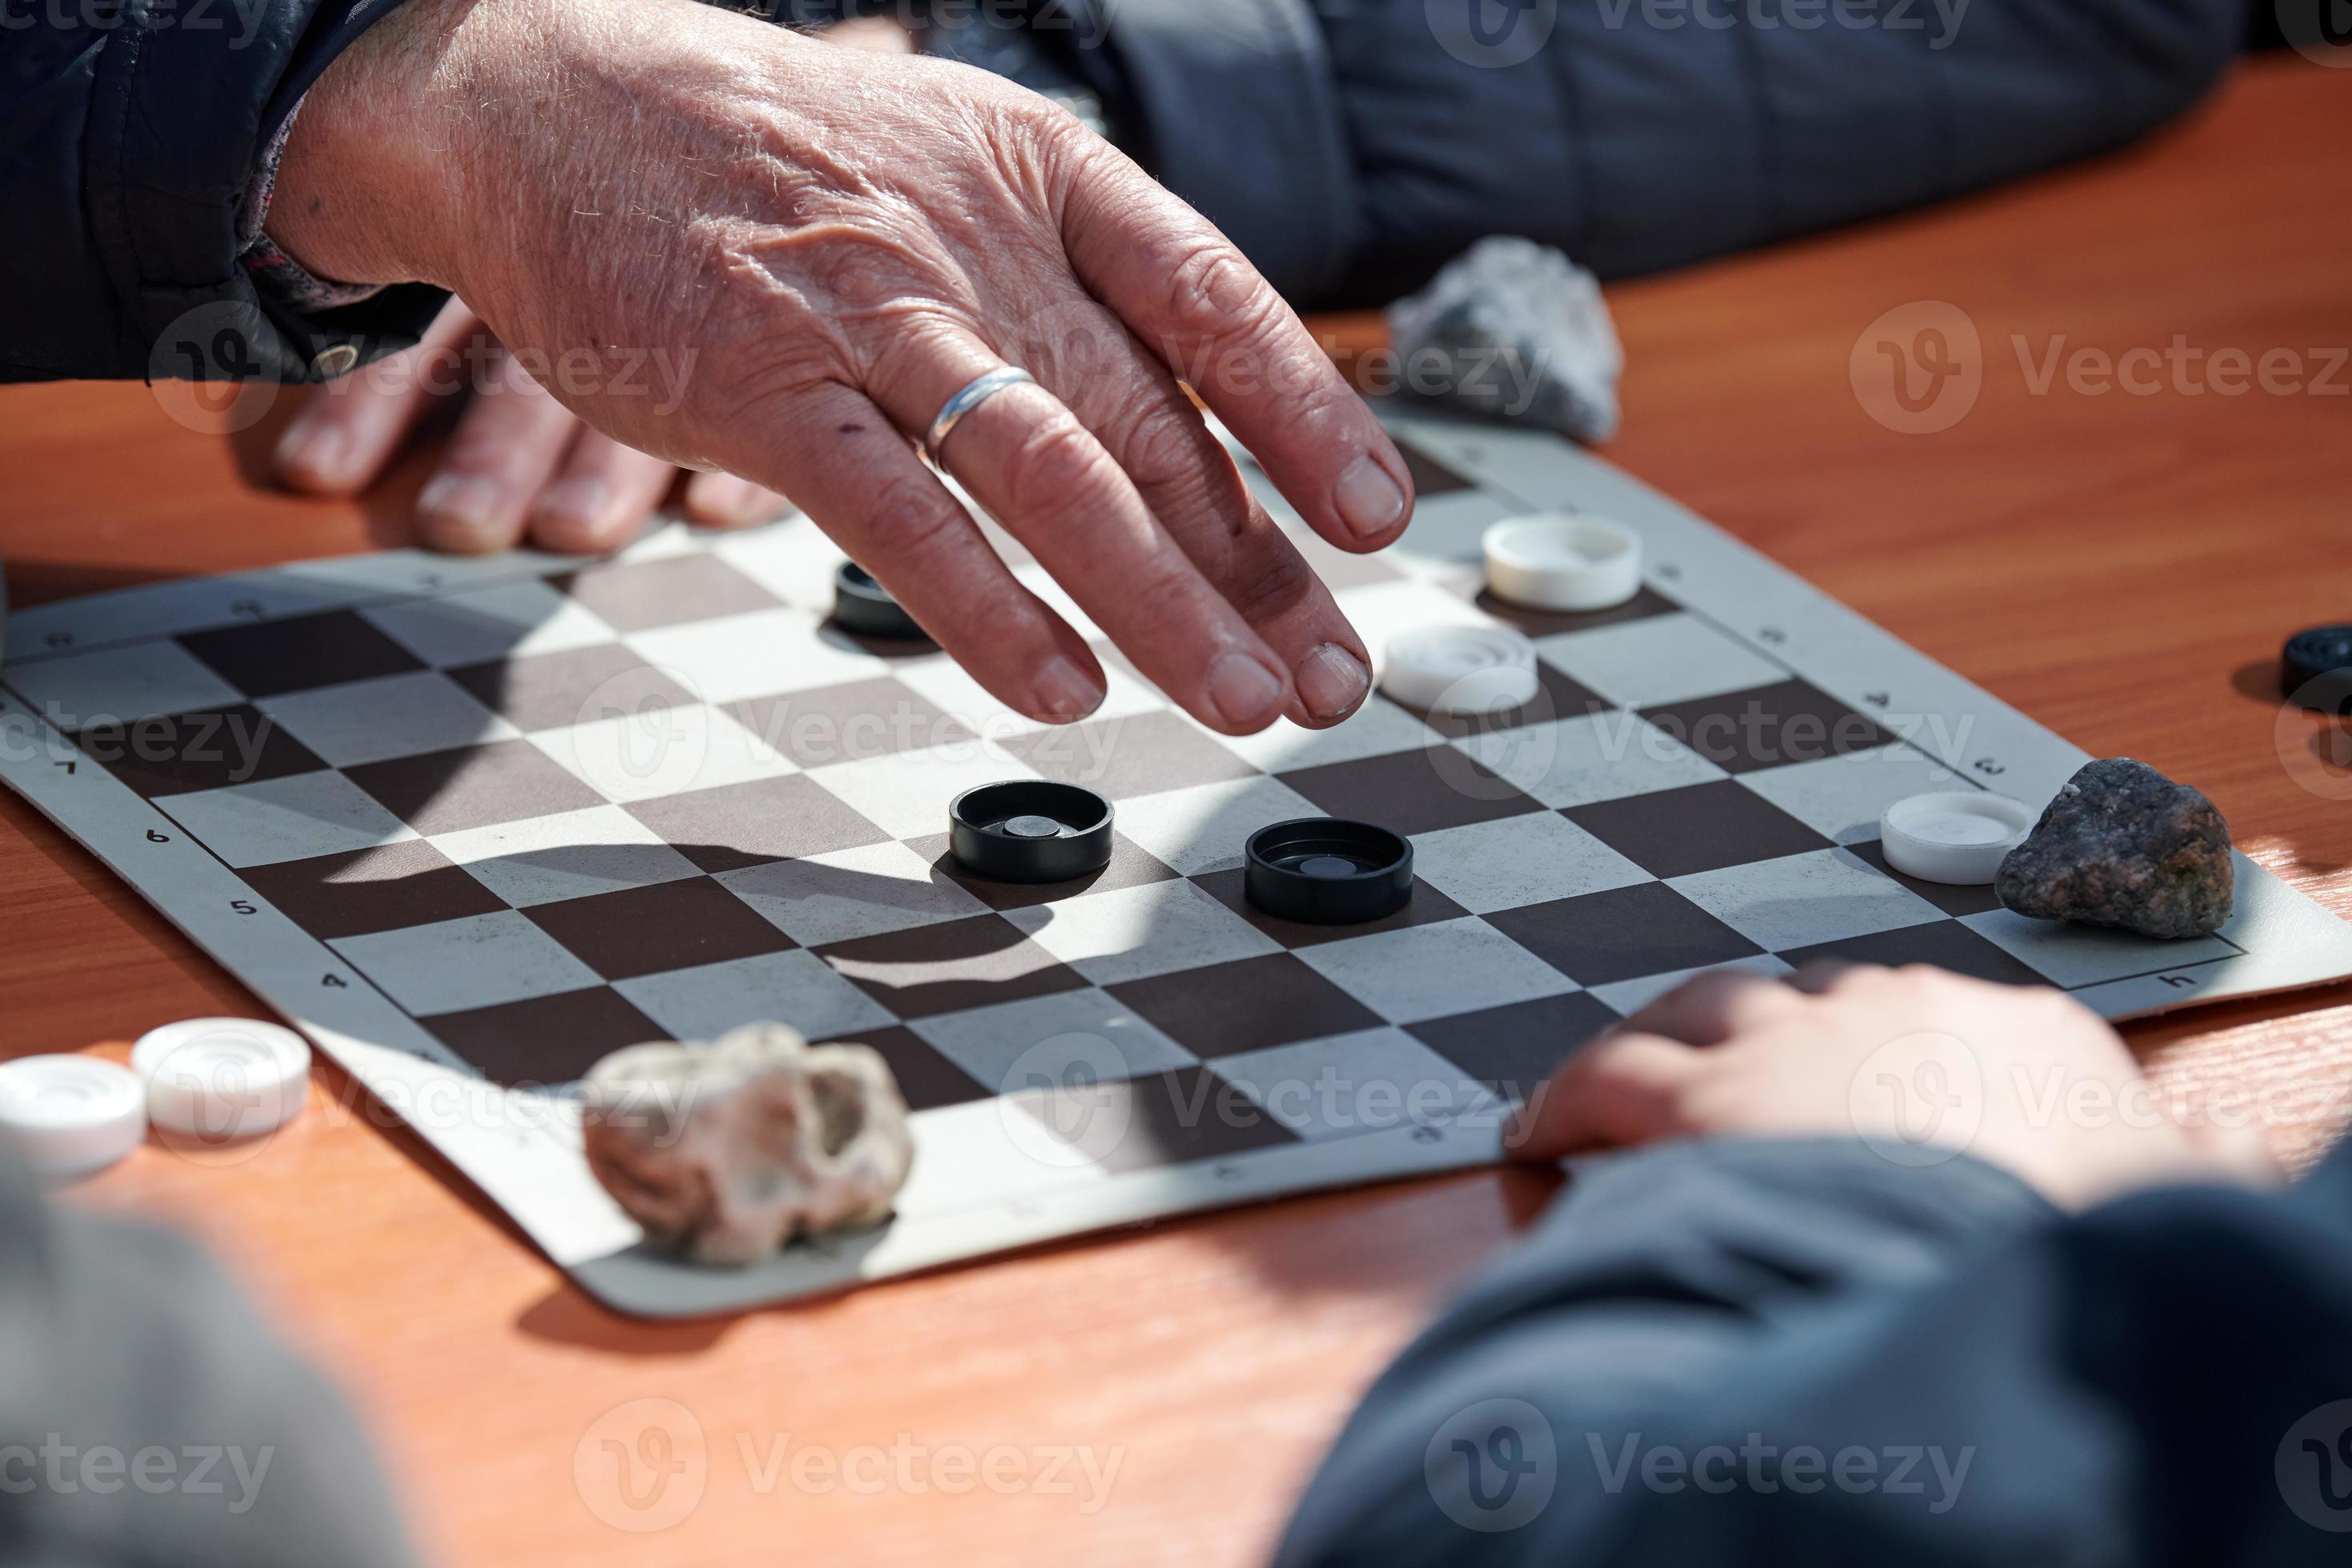 torneio de damas ao ar livre no tabuleiro de damas de papel na mesa, feche  as mãos dos jogadores 18902297 Foto de stock no Vecteezy